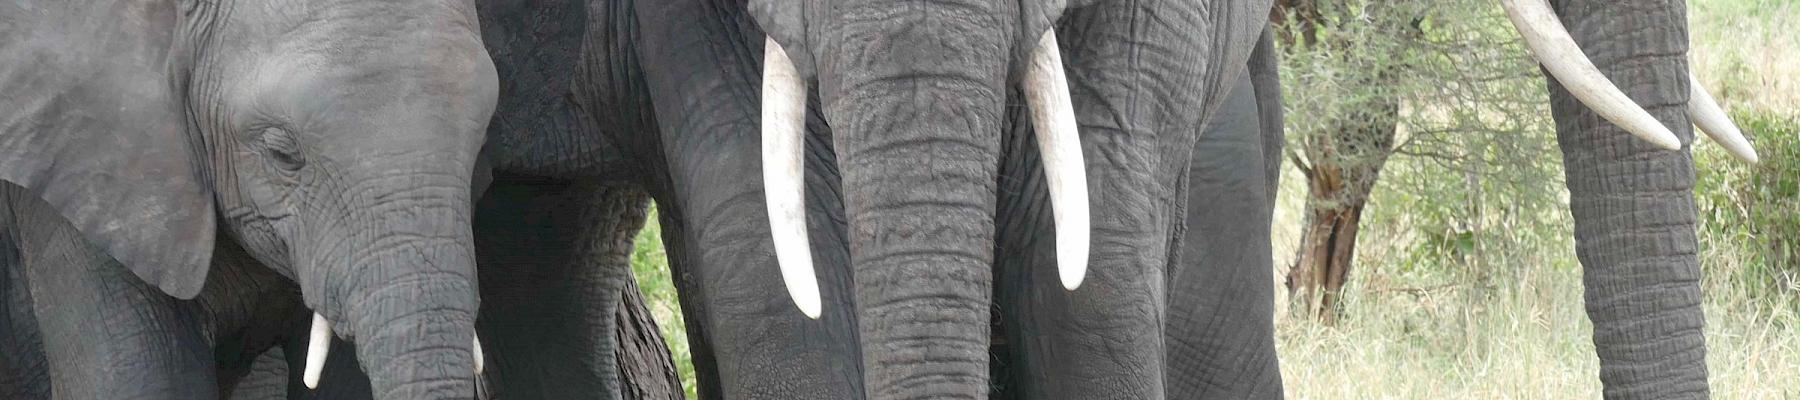 African Elephants © Julie Thomson/TRAFFIC 